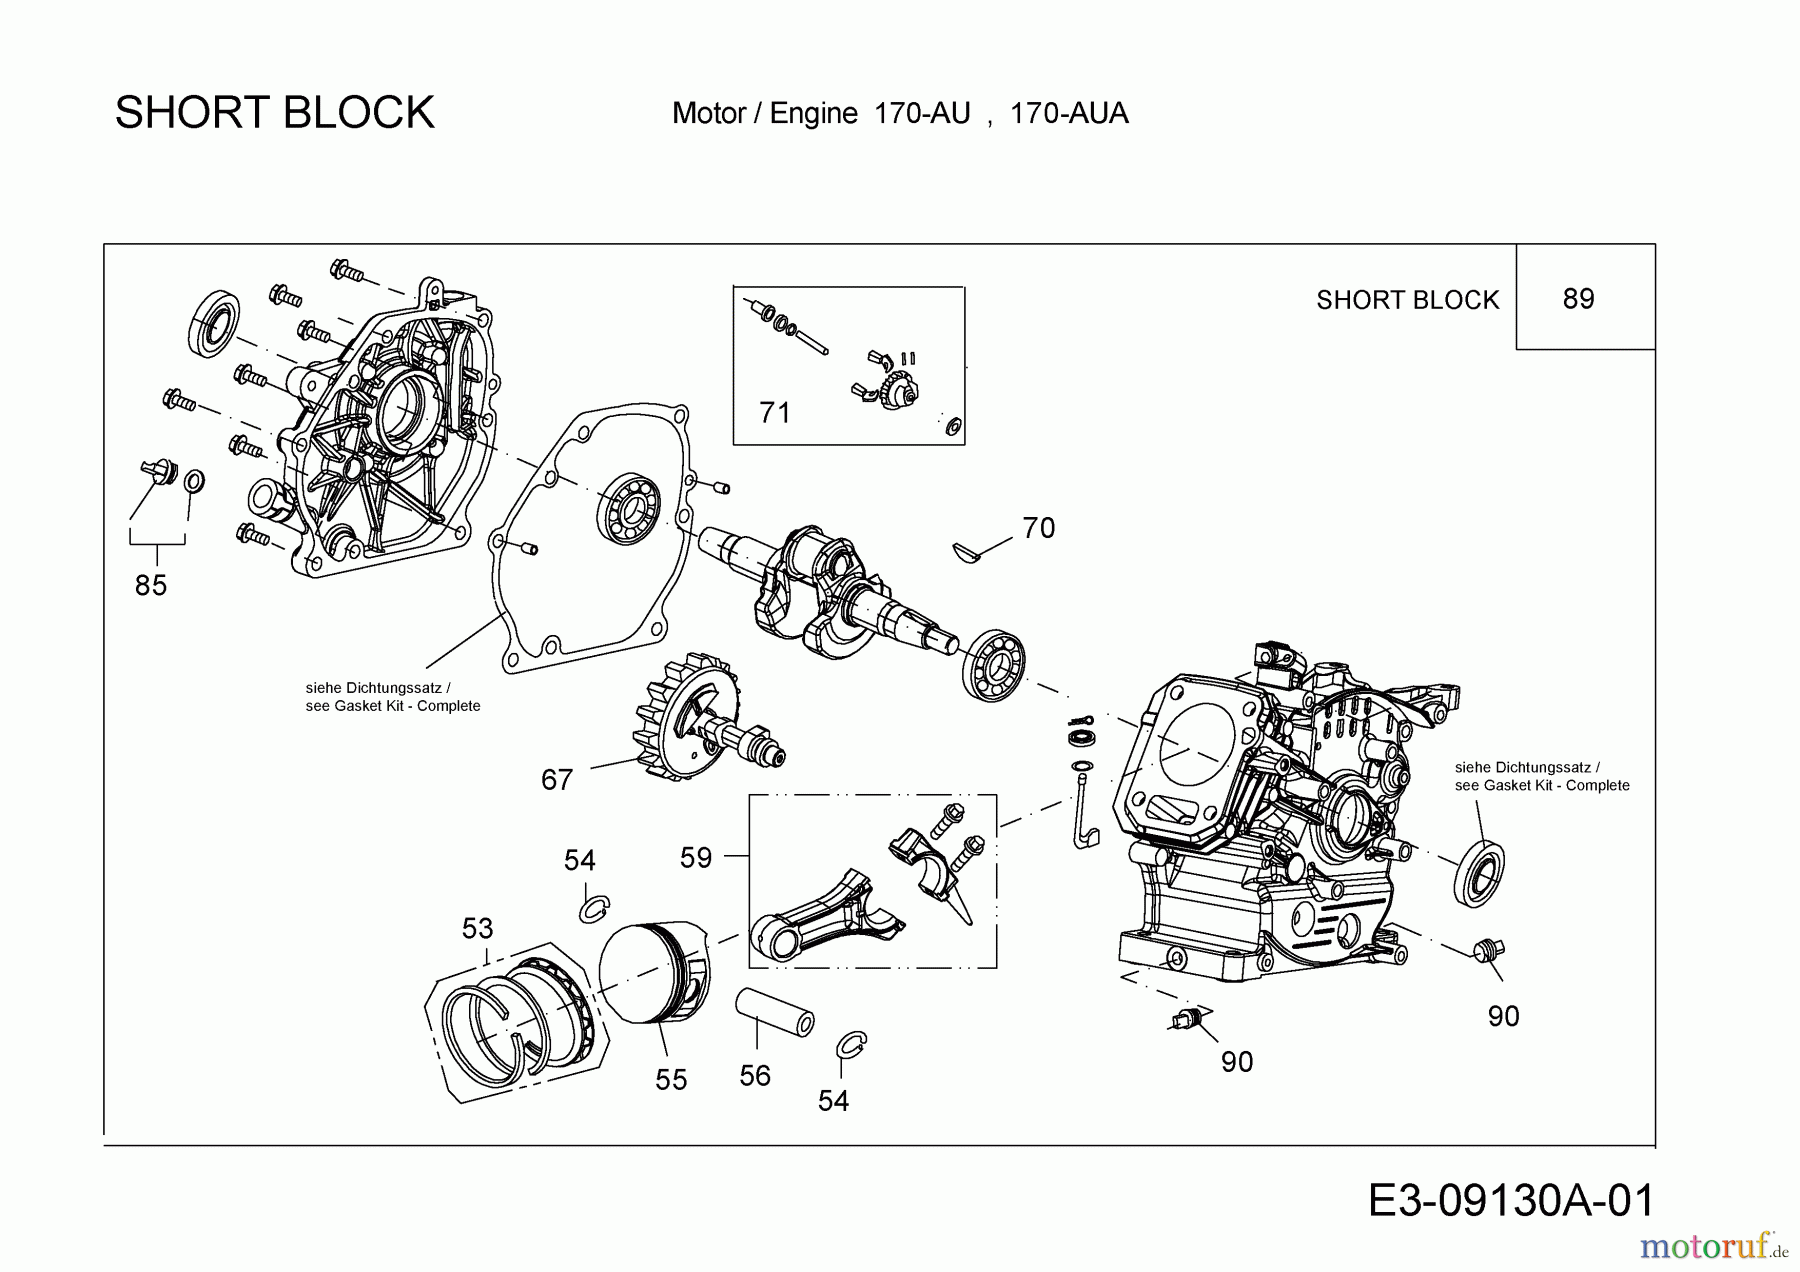  MTD-Engines Horizontal 170-AU 752Z170-AU  (2014) Short block